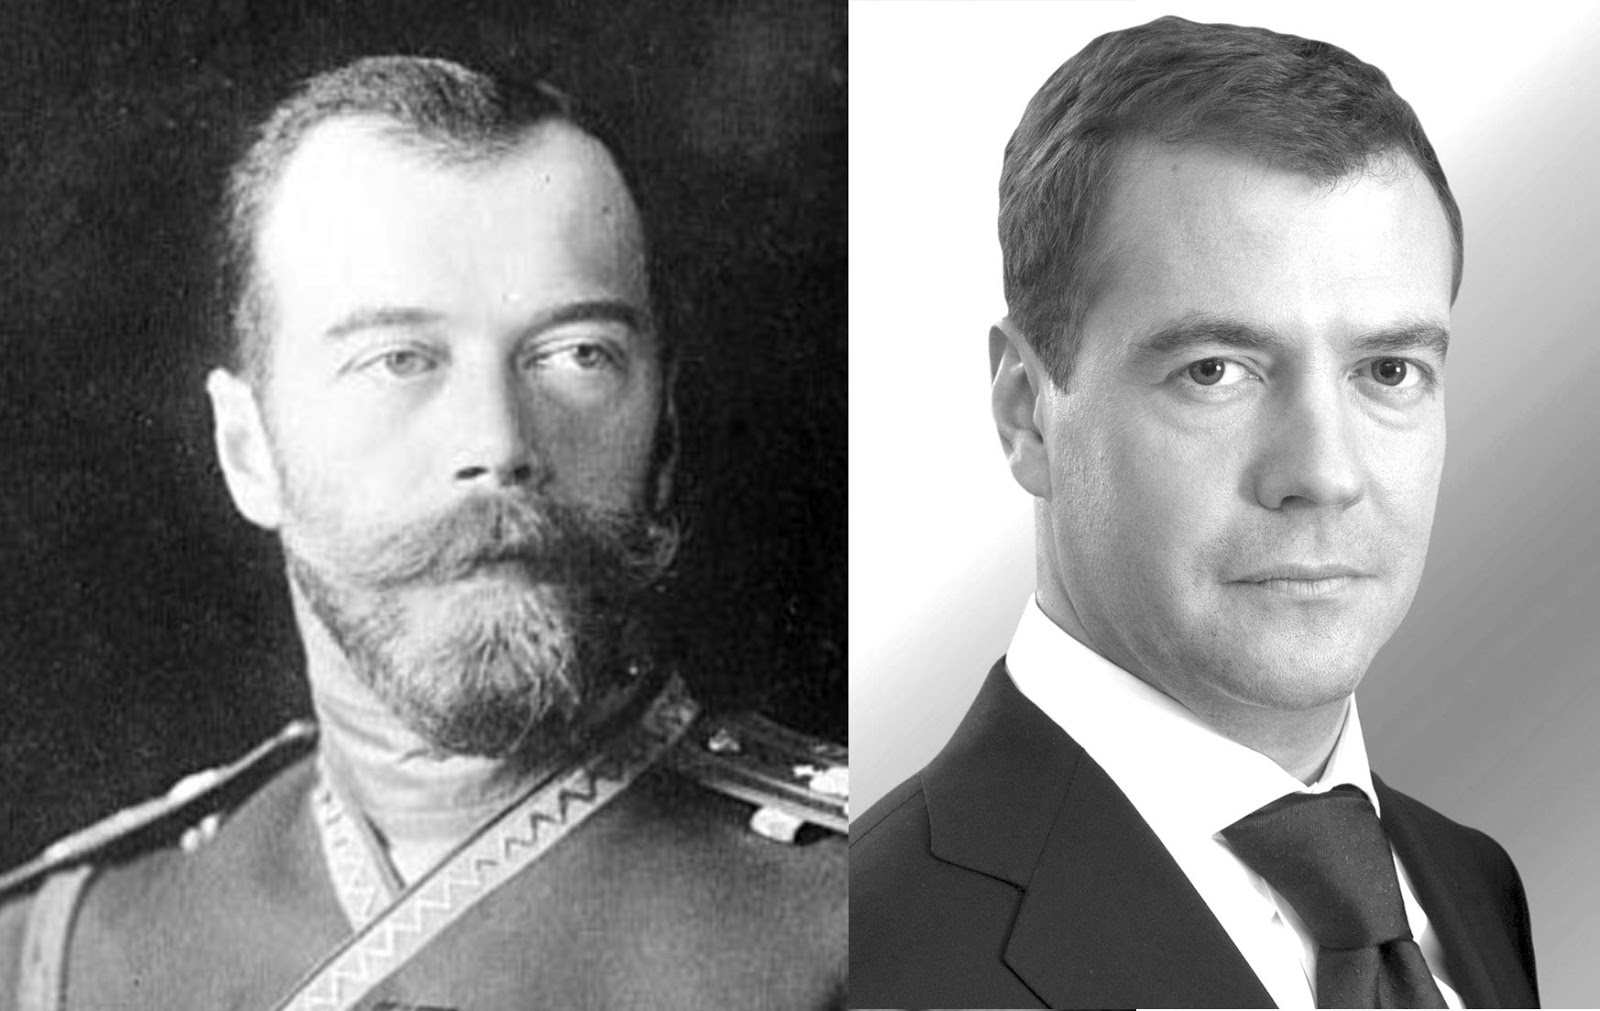 Медведев похож на николая. Медведев с бородой Николая 2.